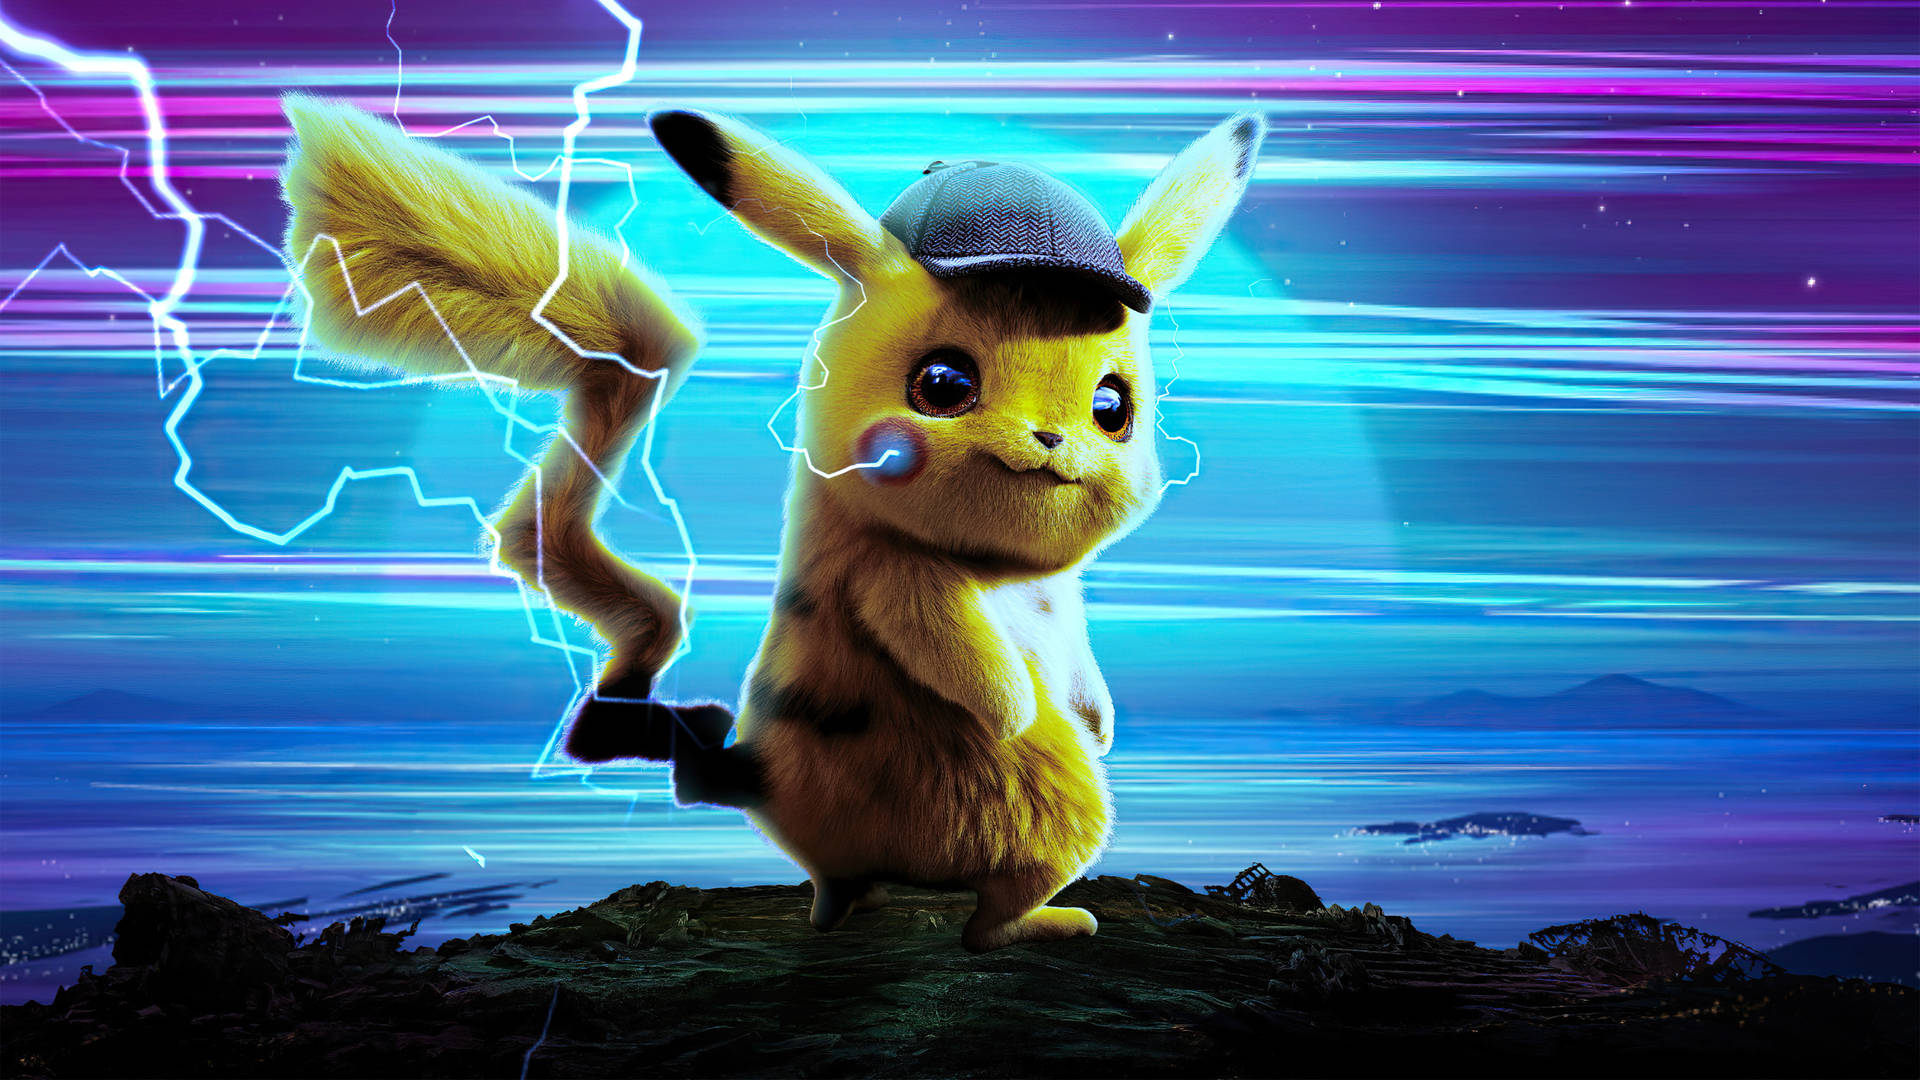 Pikachu Thunderbolt Attack Background